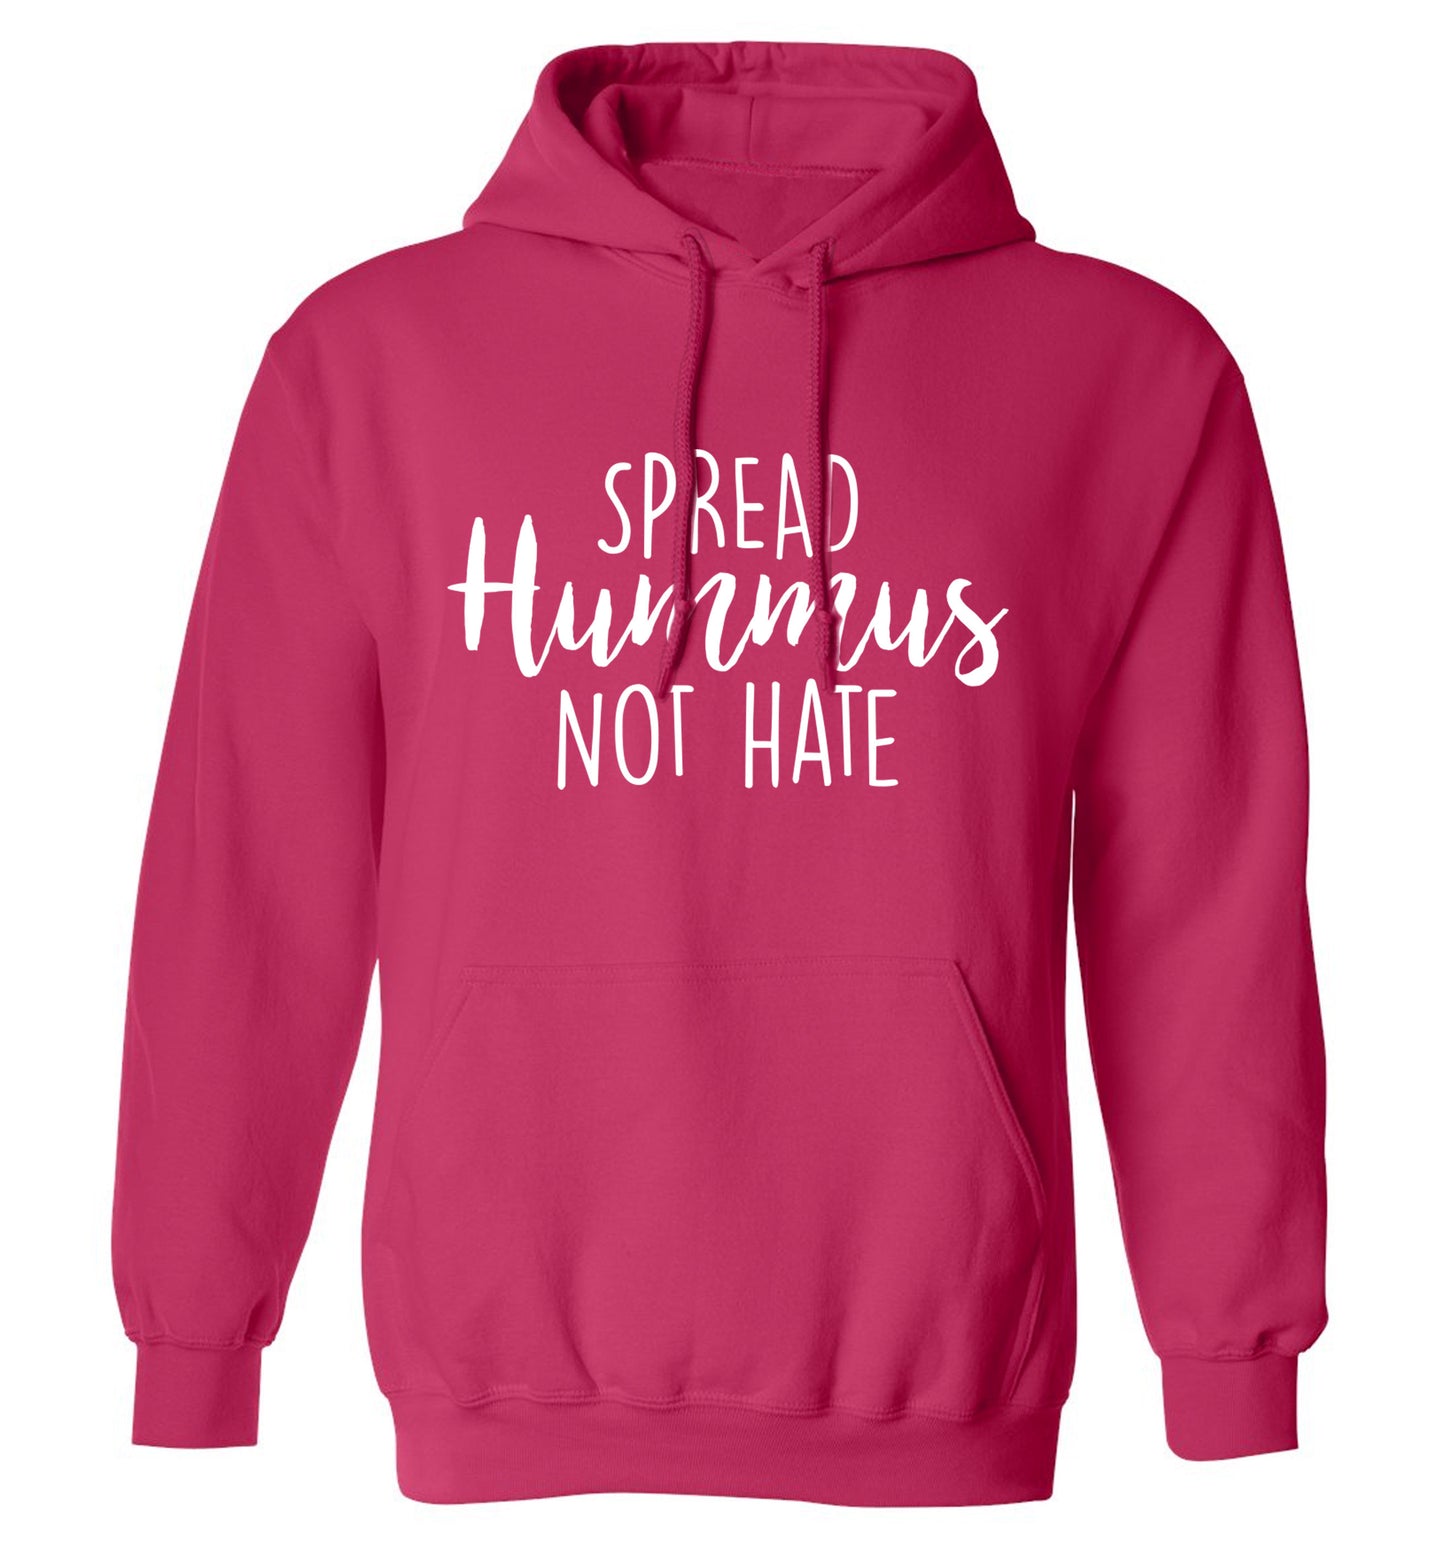 Spread hummus not hate script text adults unisex pink hoodie 2XL